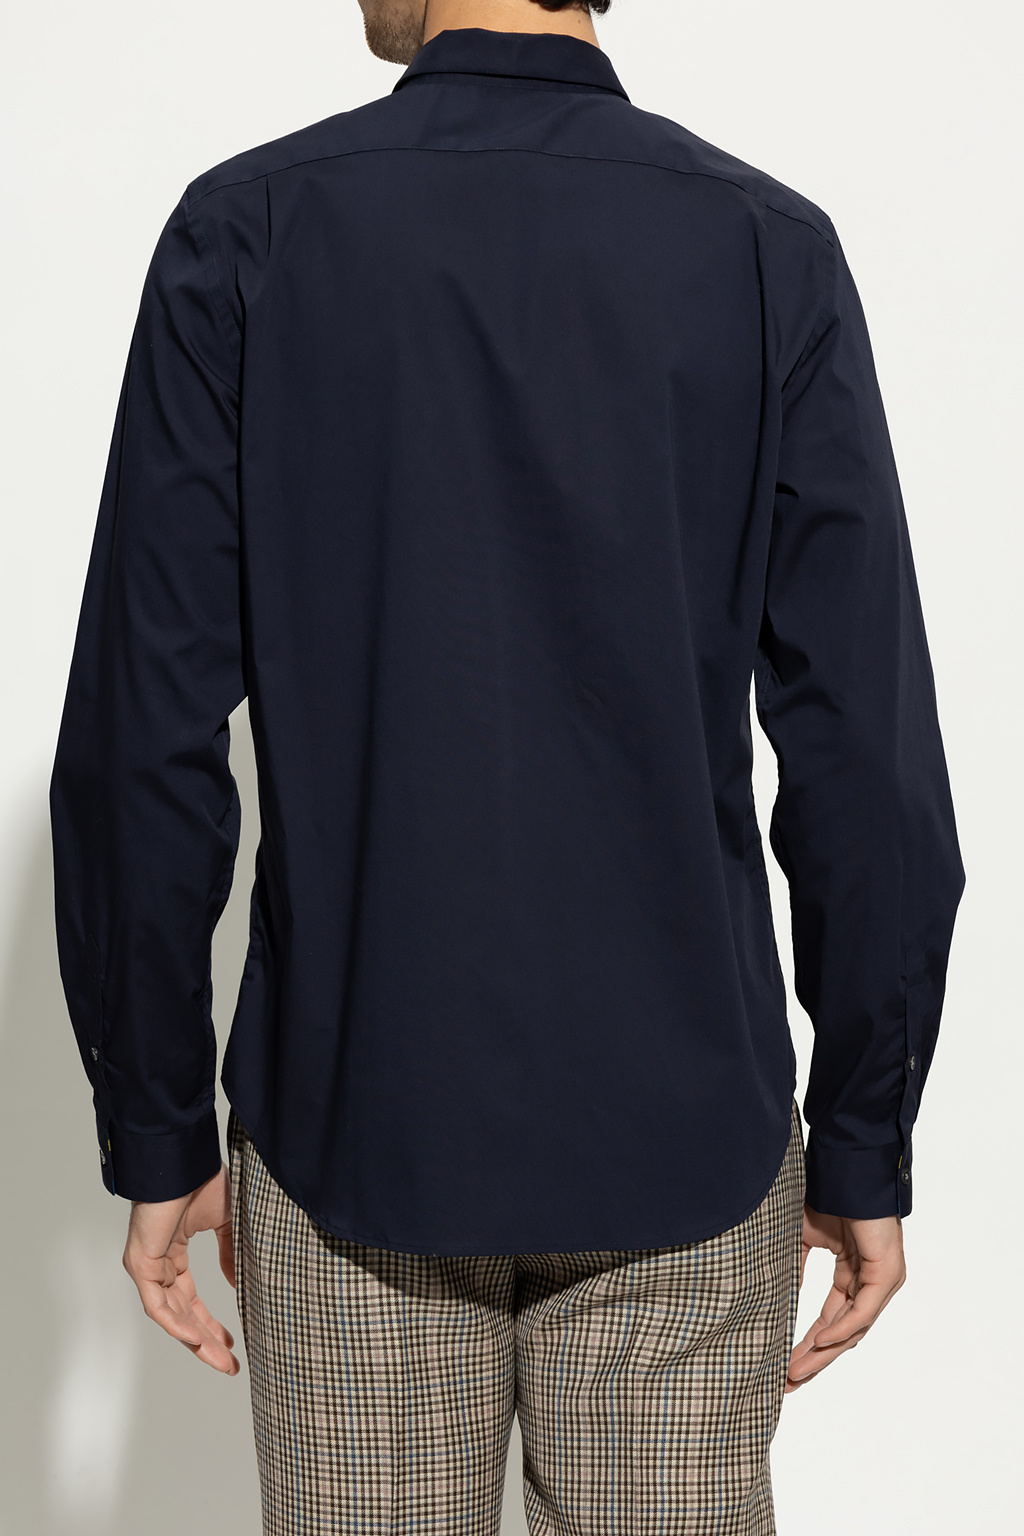 jacket with logo adidas by stella mccartney jacket tecbei Cotton shirt